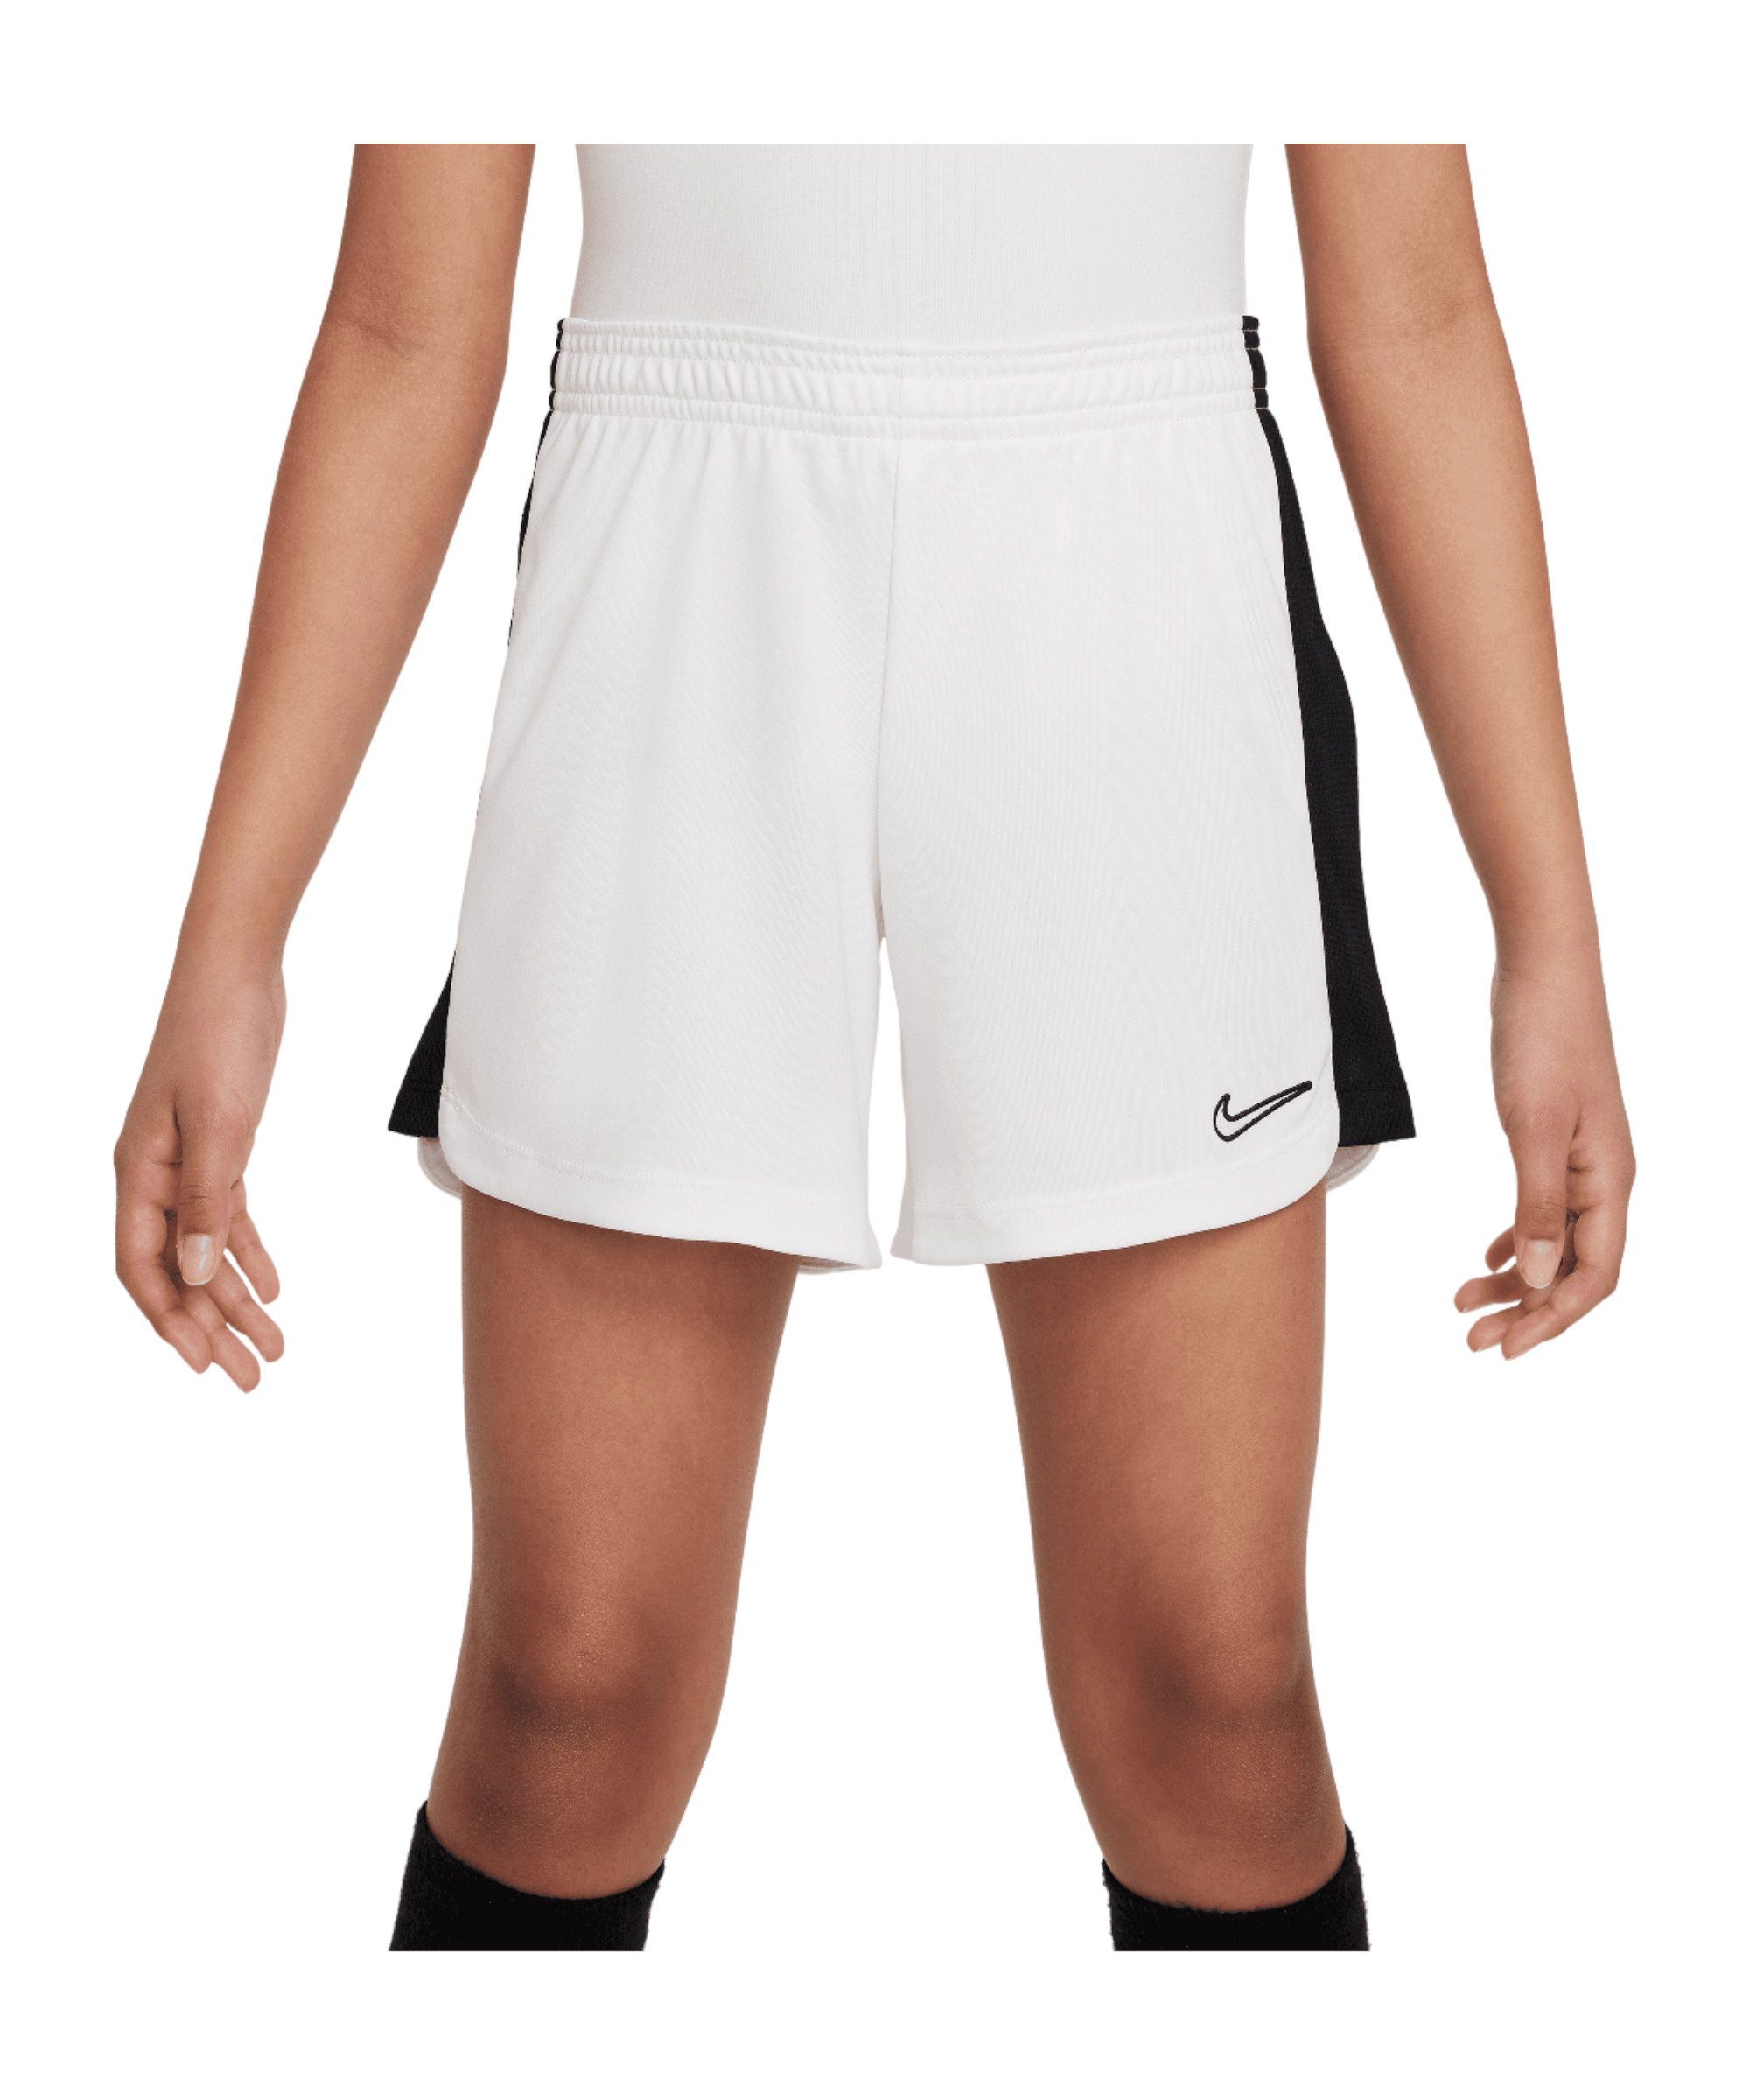 Damen Shorts weissschwarzschwarz Sporthose Academy Nike 23